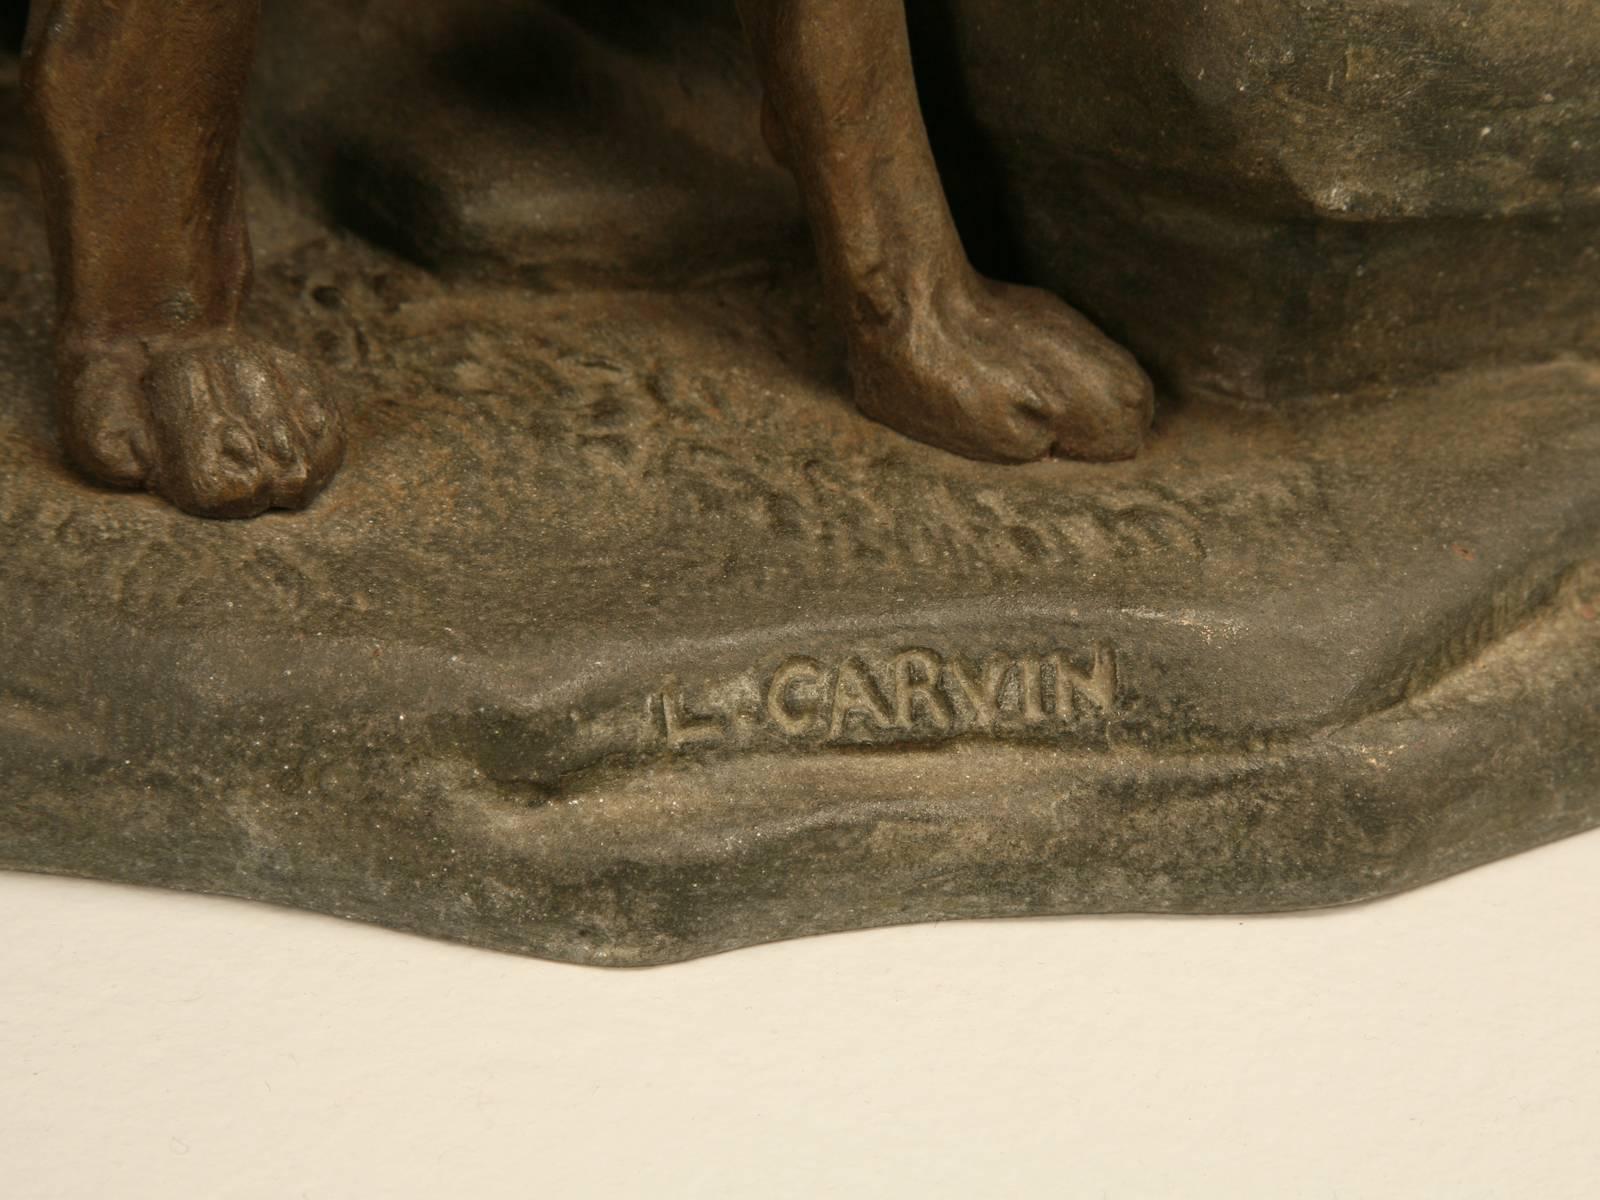 Early 20th Century German Shepherd Dog Sculpture by Louis-Albert Carvin